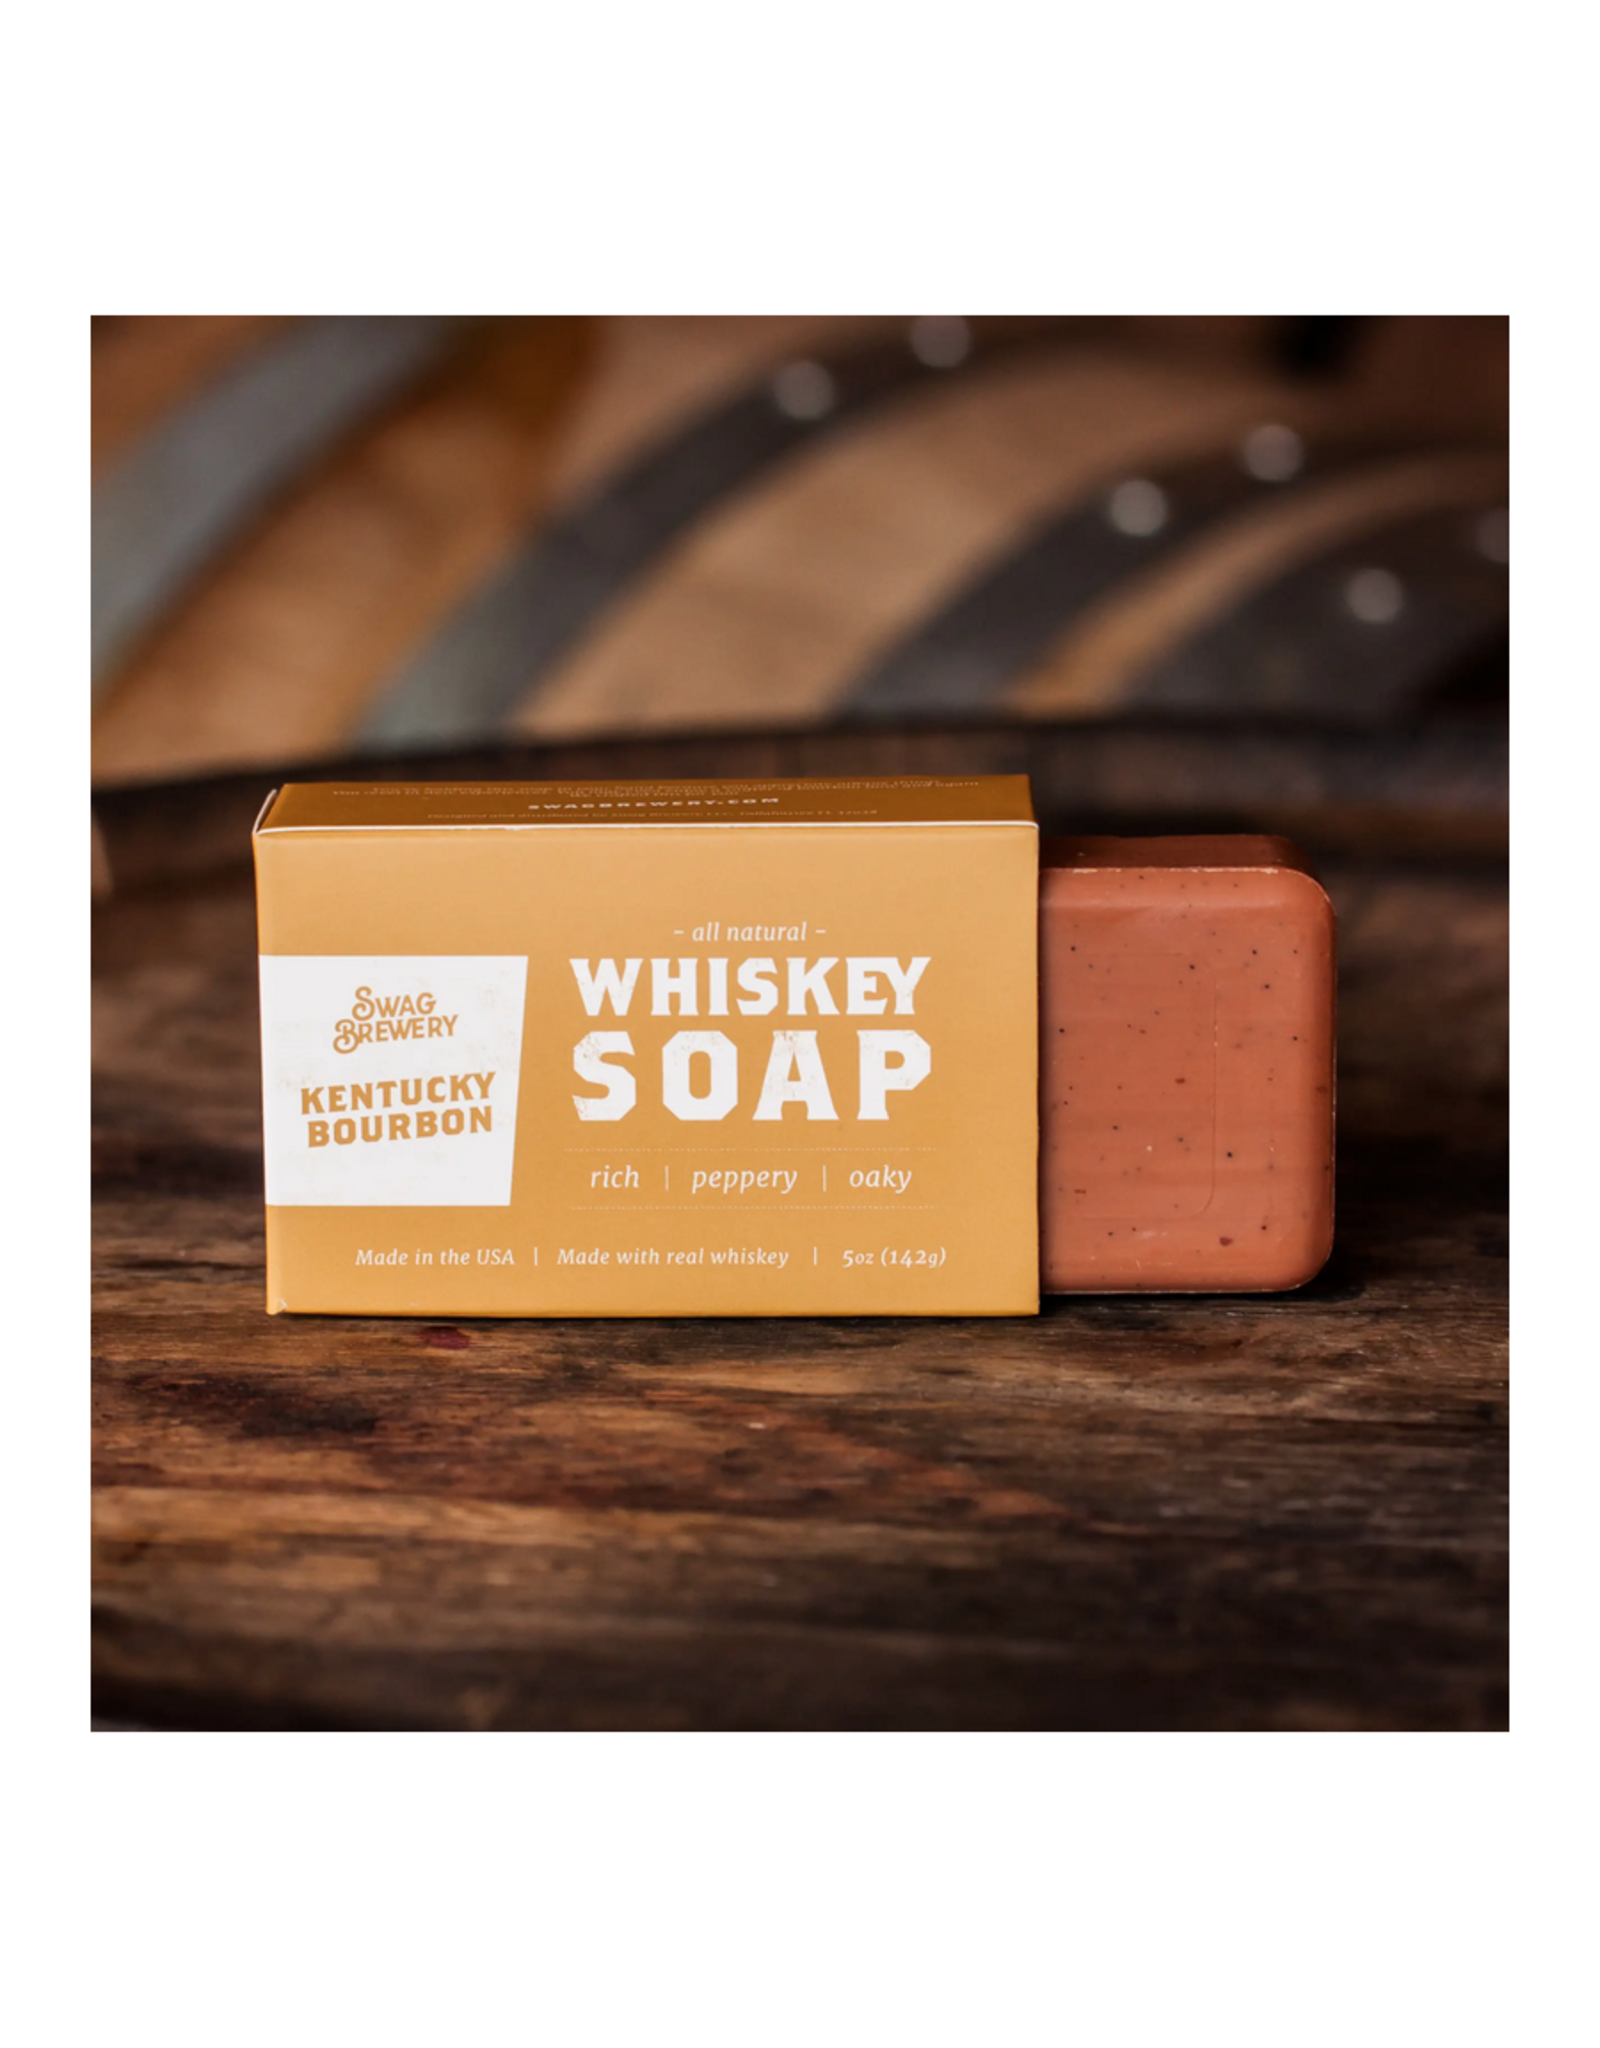 Kentucky Bourbon Whiskey Soap Bar